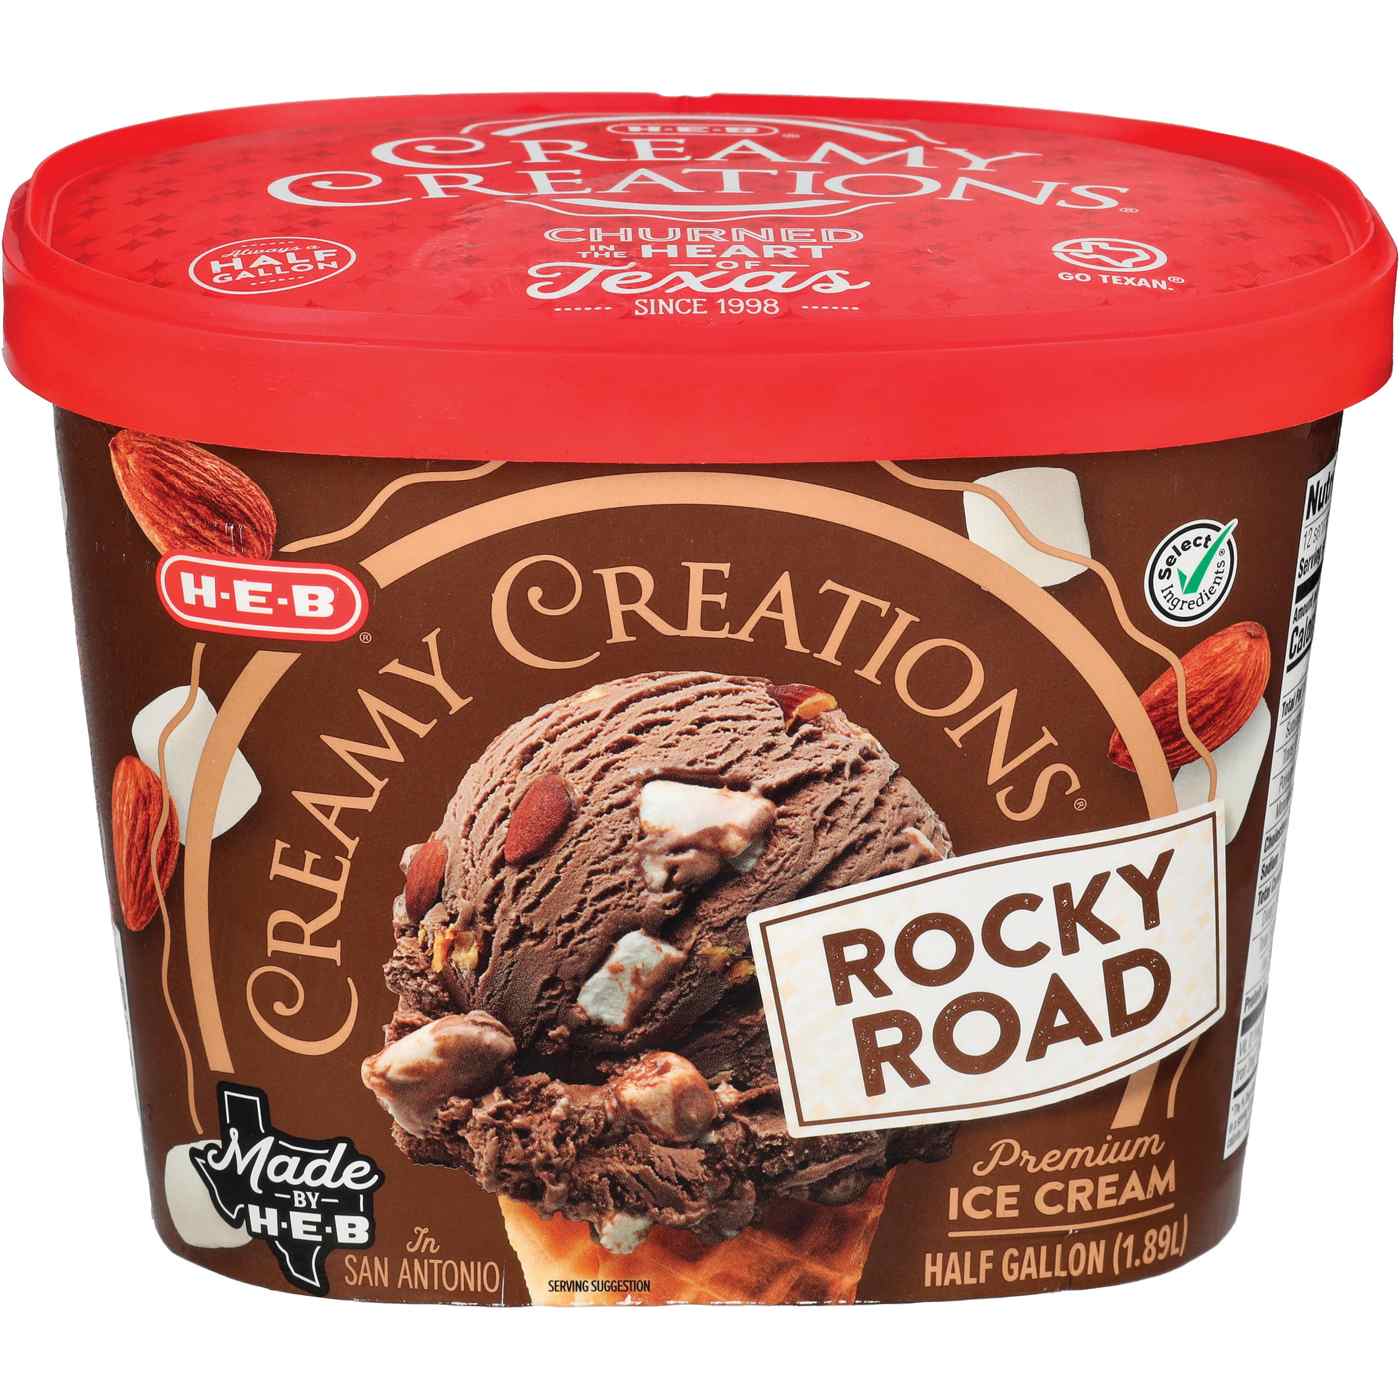 H-E-B Creamy Creations Rocky Road Ice Cream; image 1 of 2